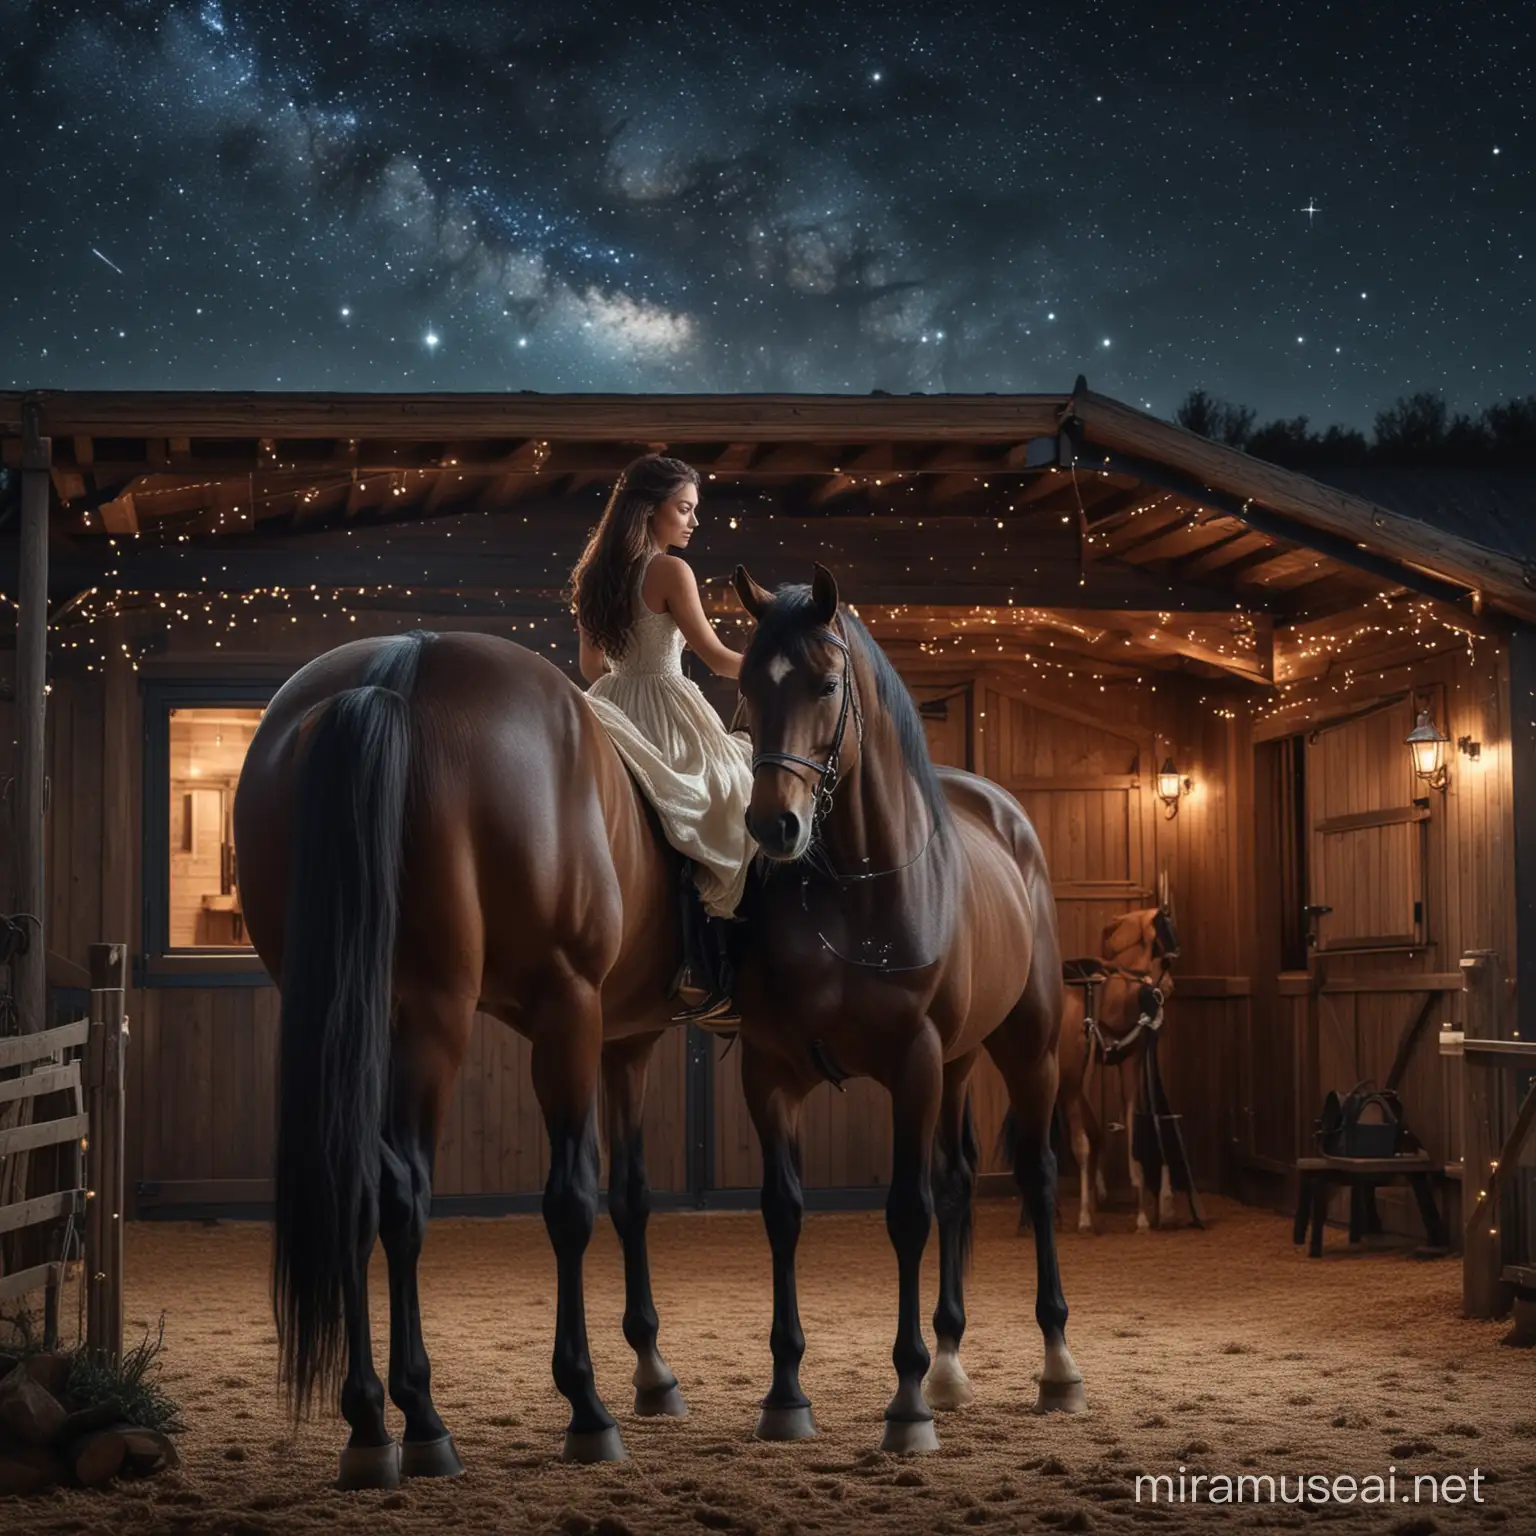 Luxurious Oak Stable Equestrian Love Under a Spiritual Starry Night